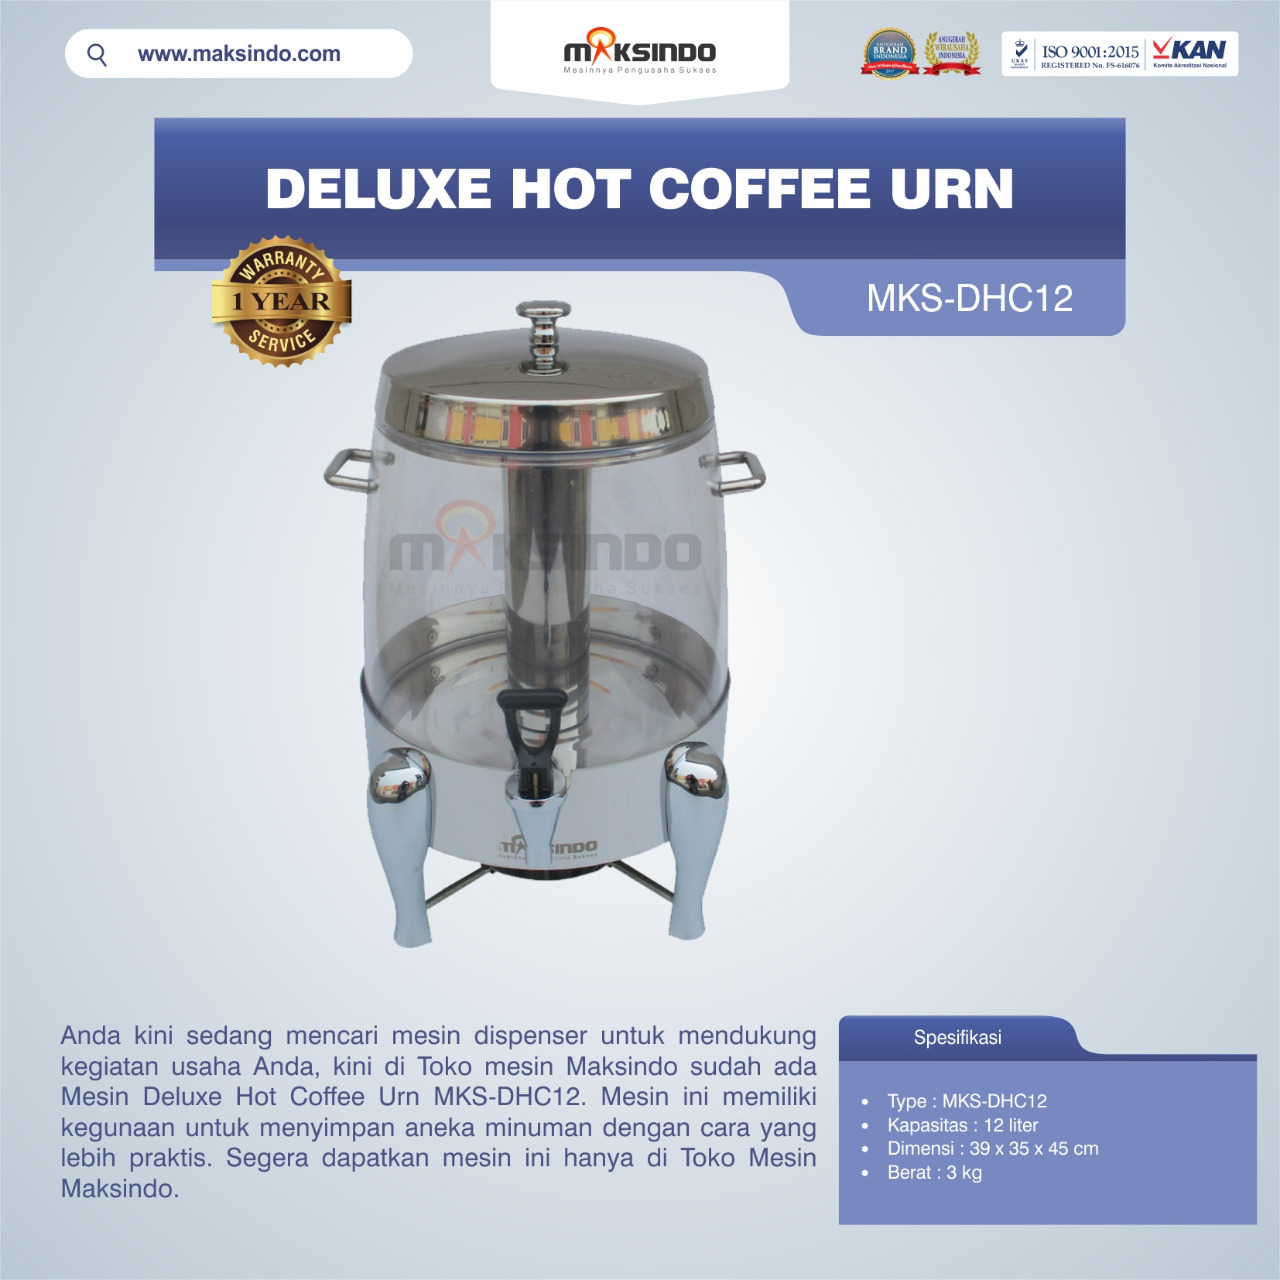 Jual Deluxe Hot Coffee Urn MKS-DHC12 di Jakarta